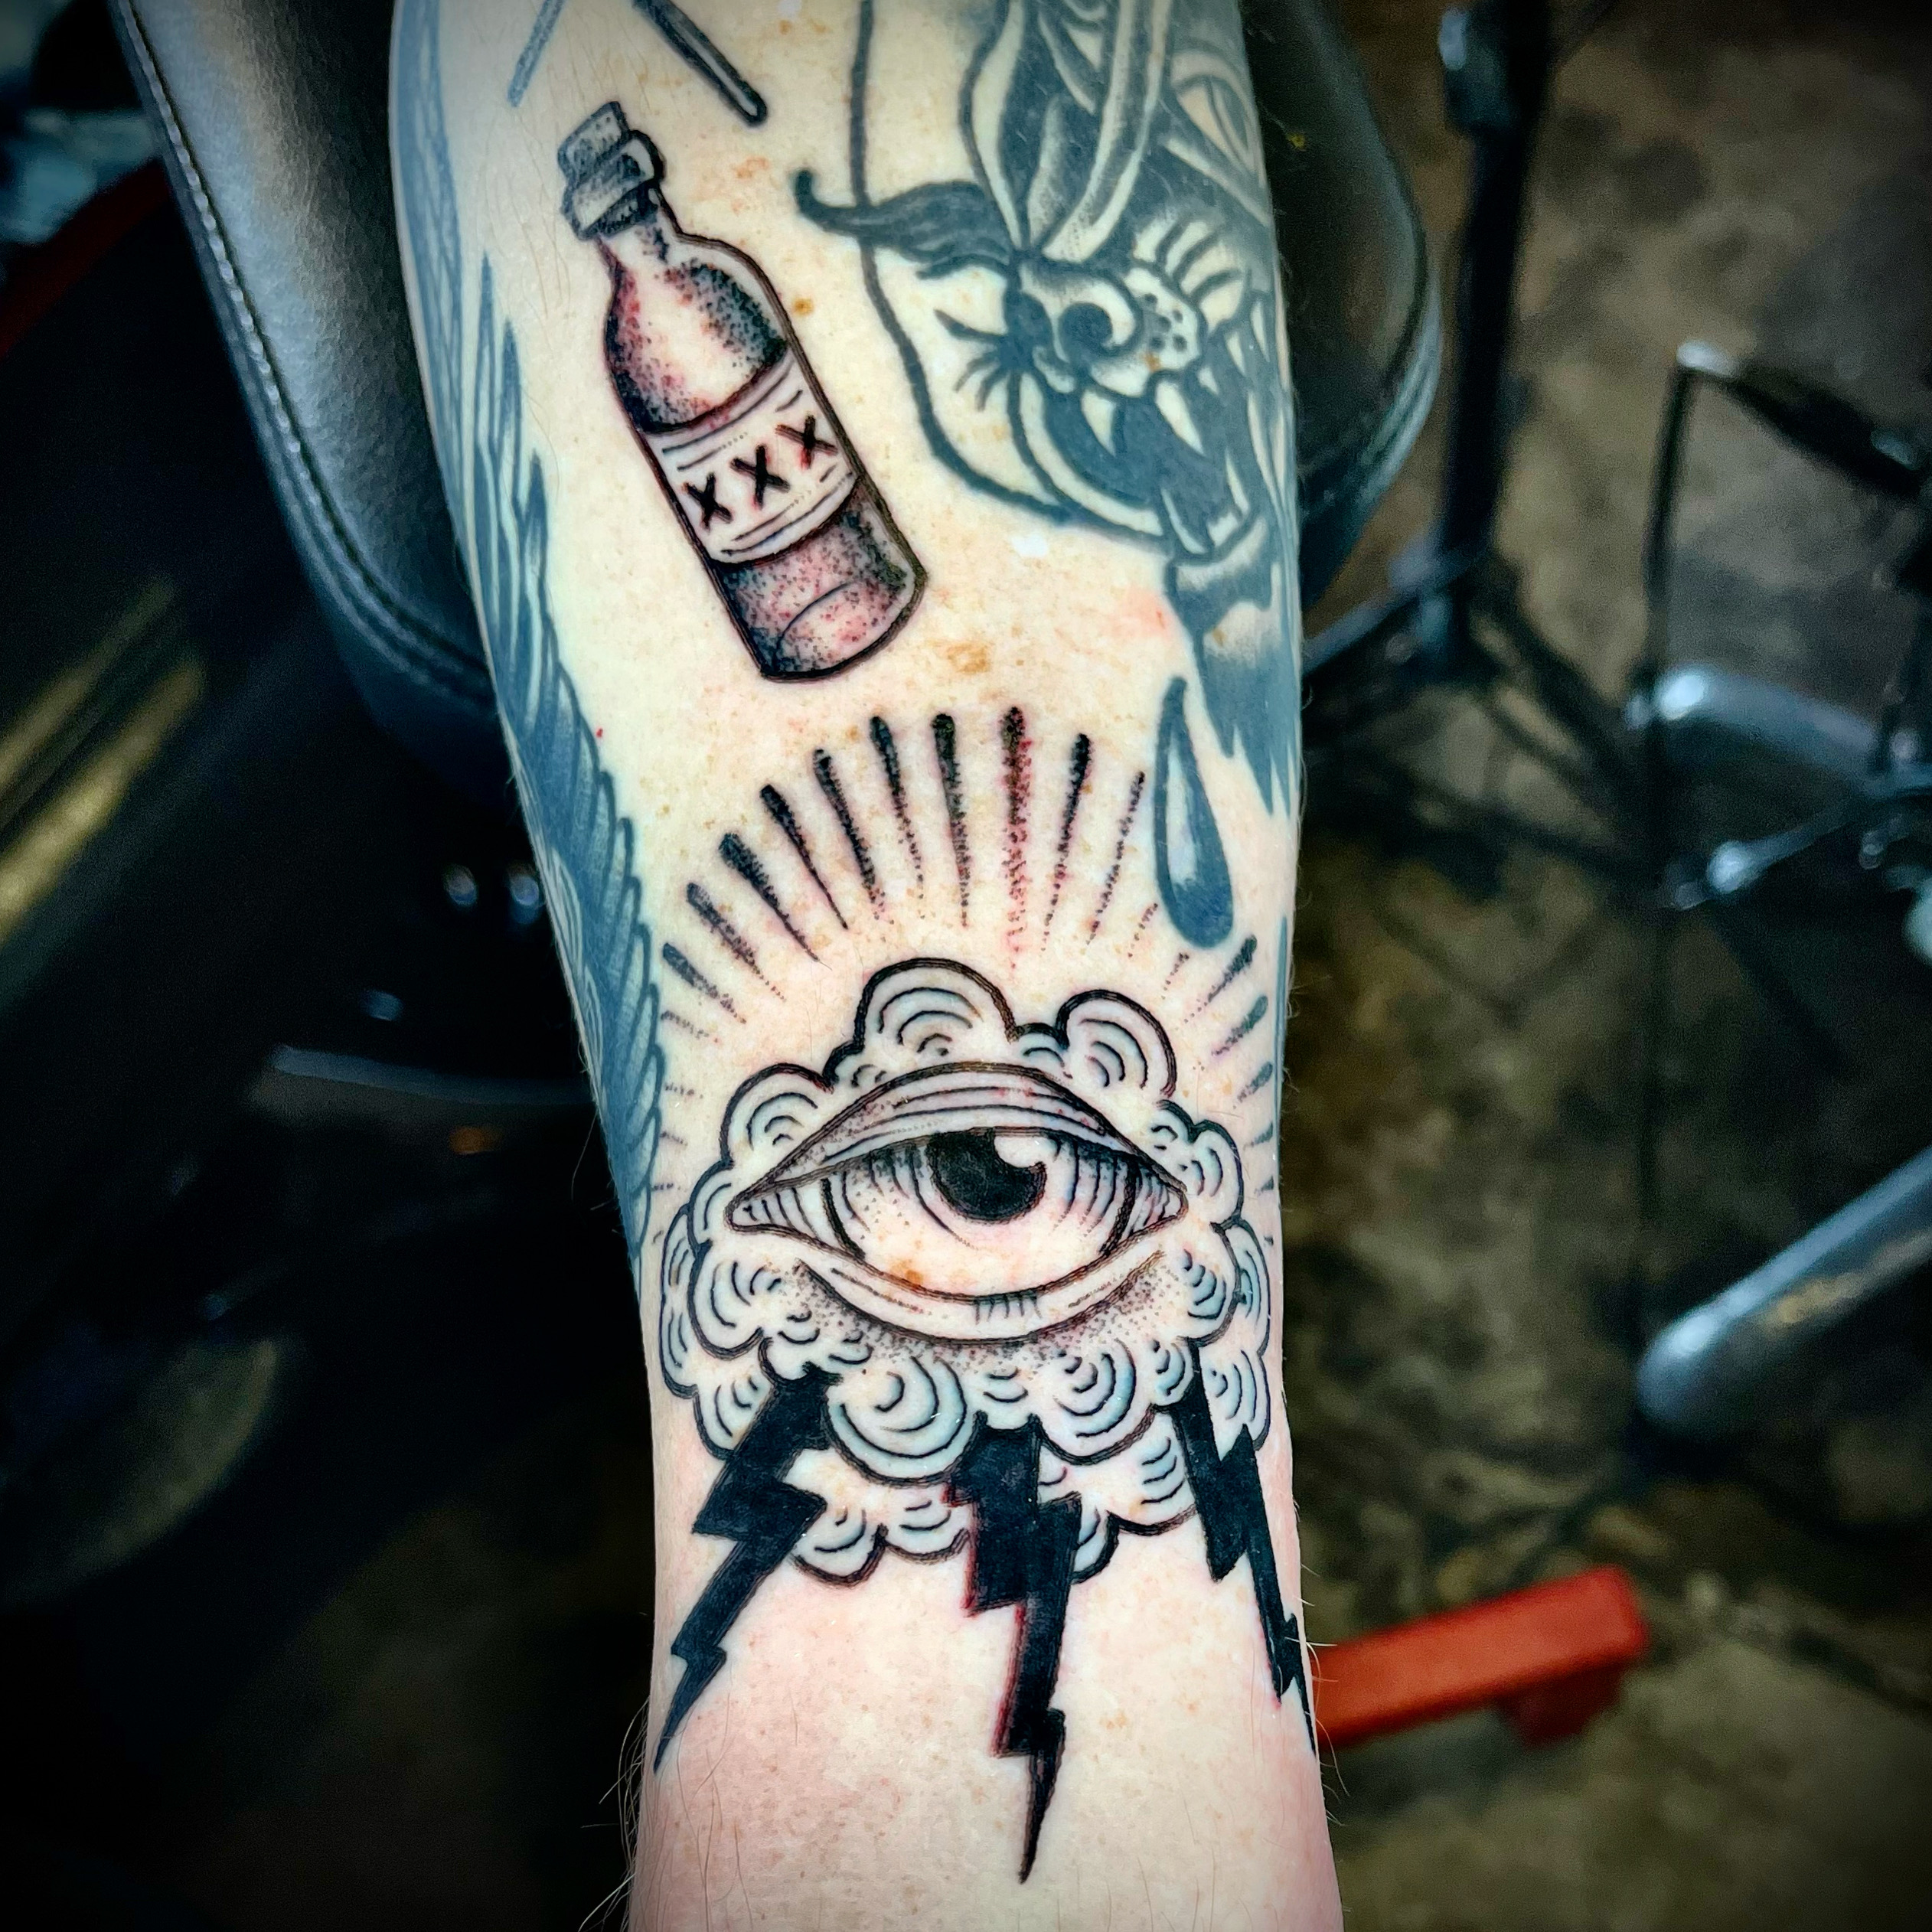 Eye tattoo on an arm from Dallas Tattoo artist